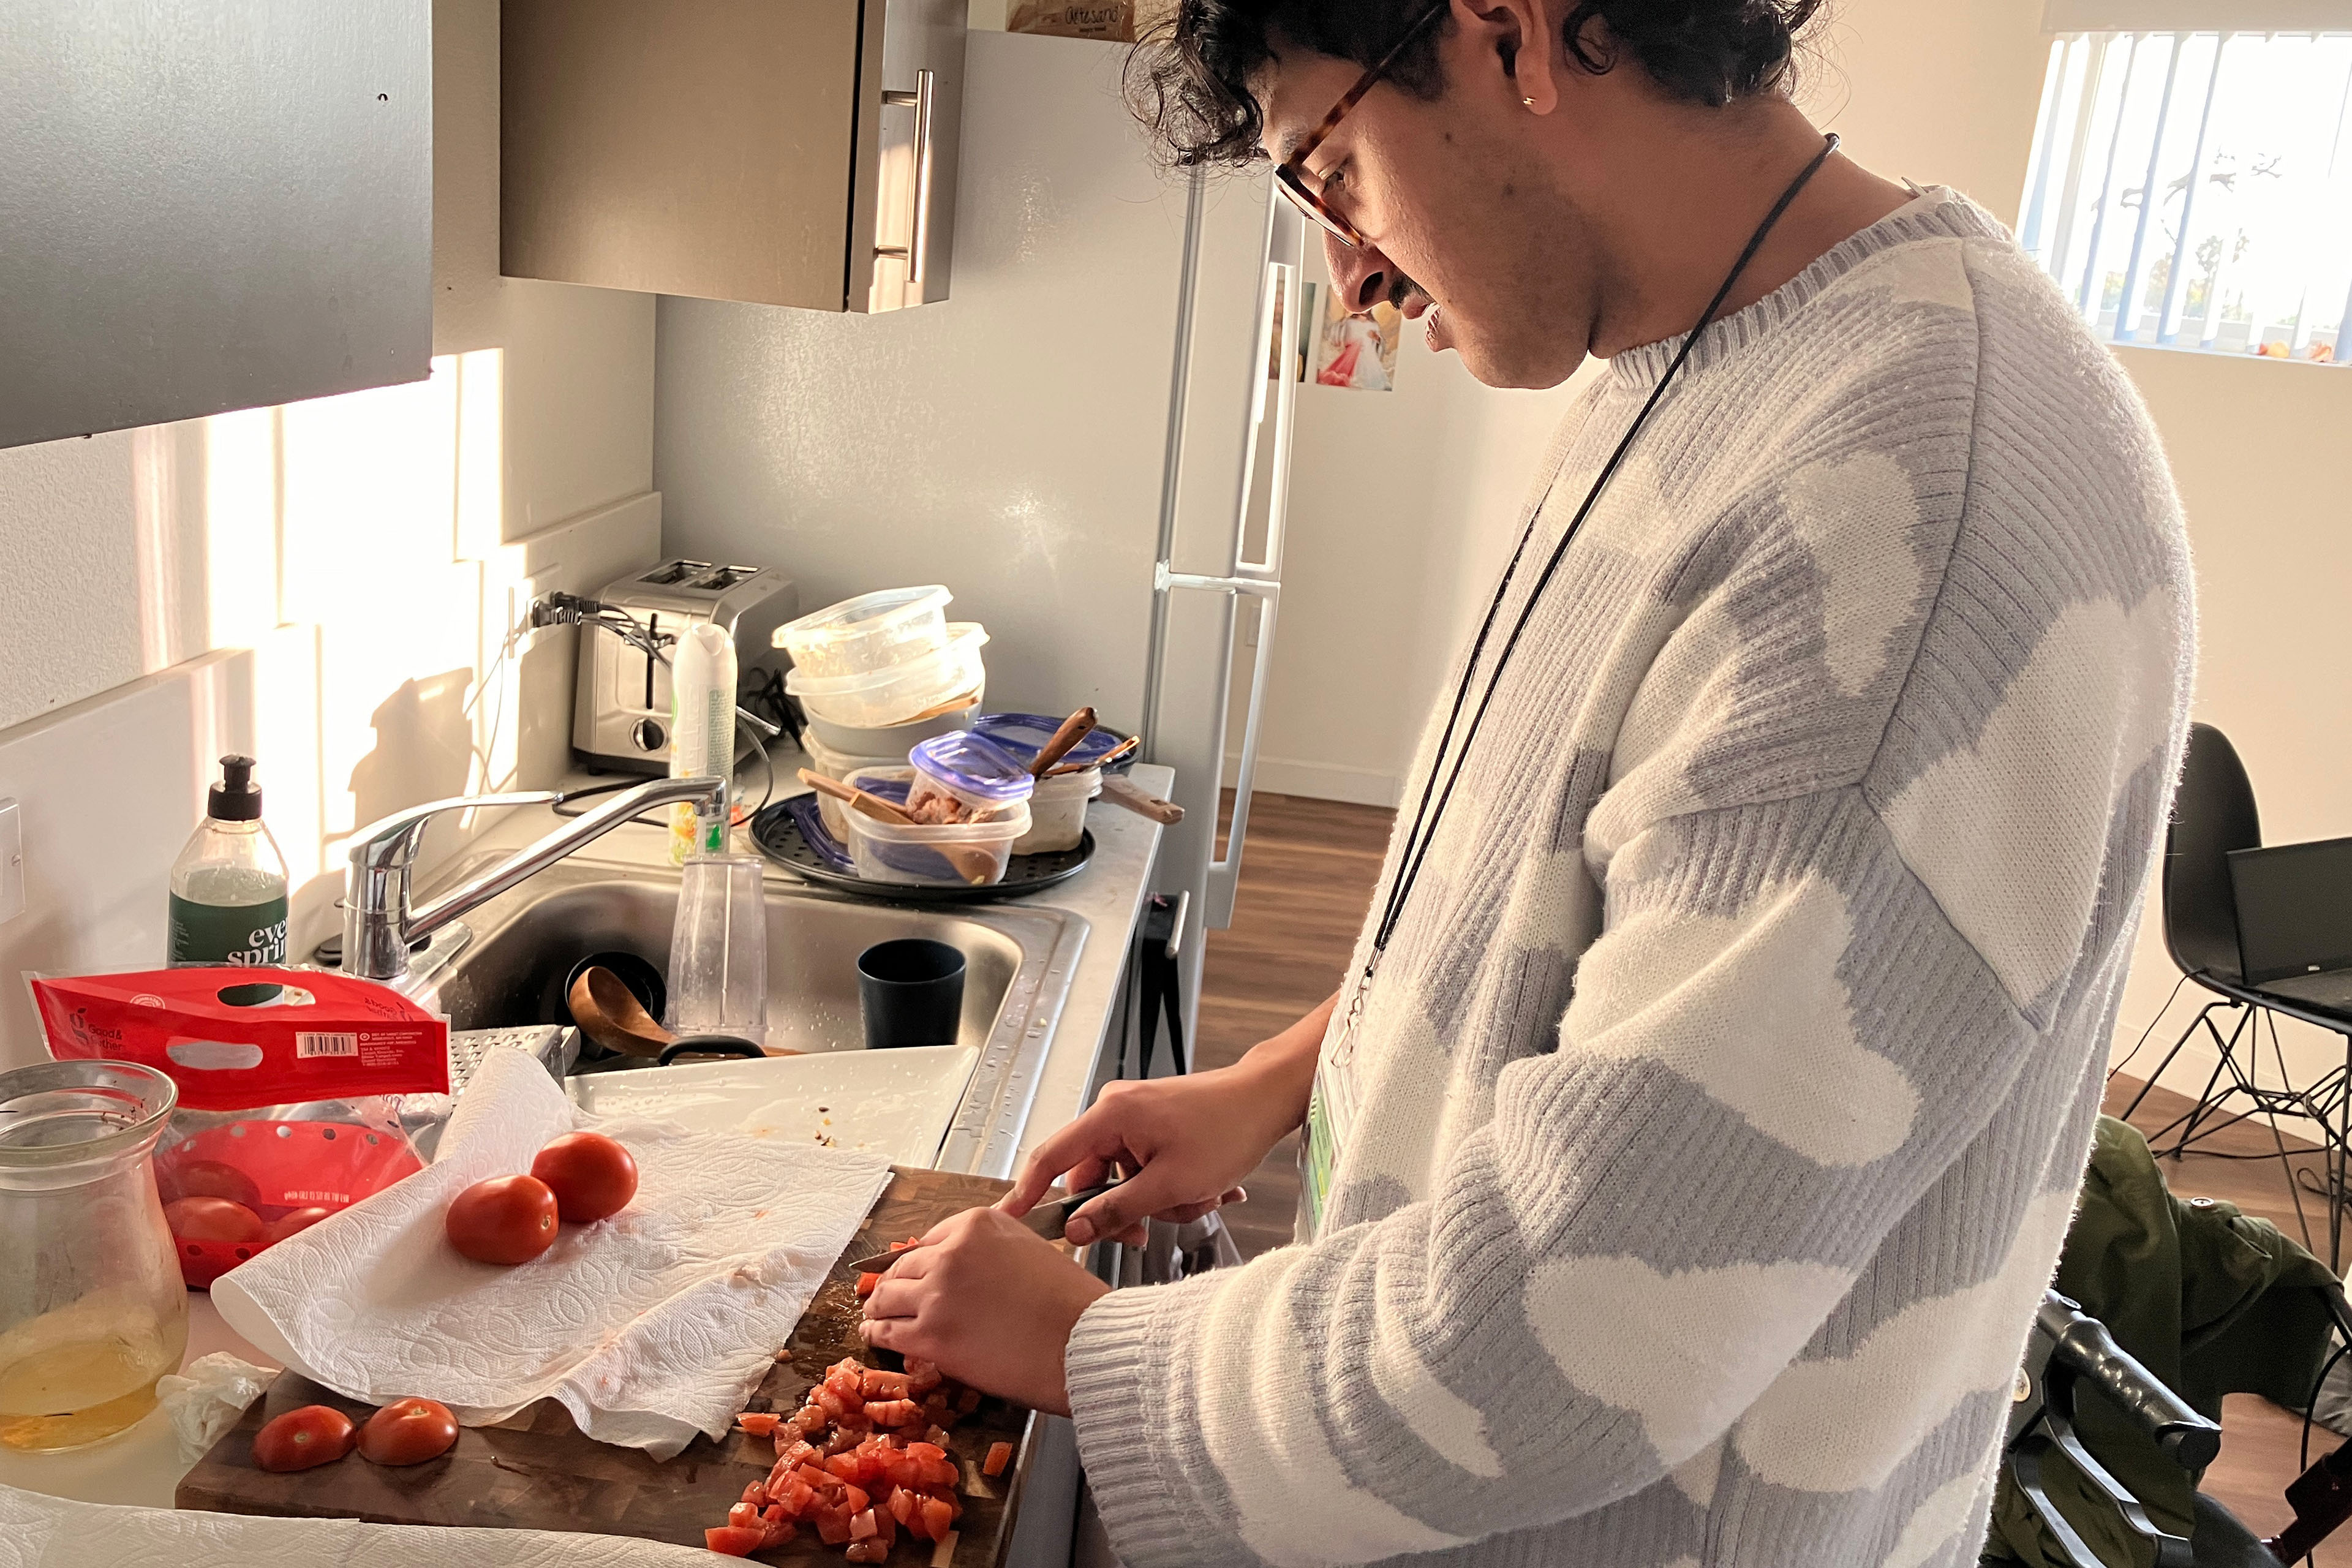 Julian Prado cuts tomatoes in Carla Brown's kitchen.